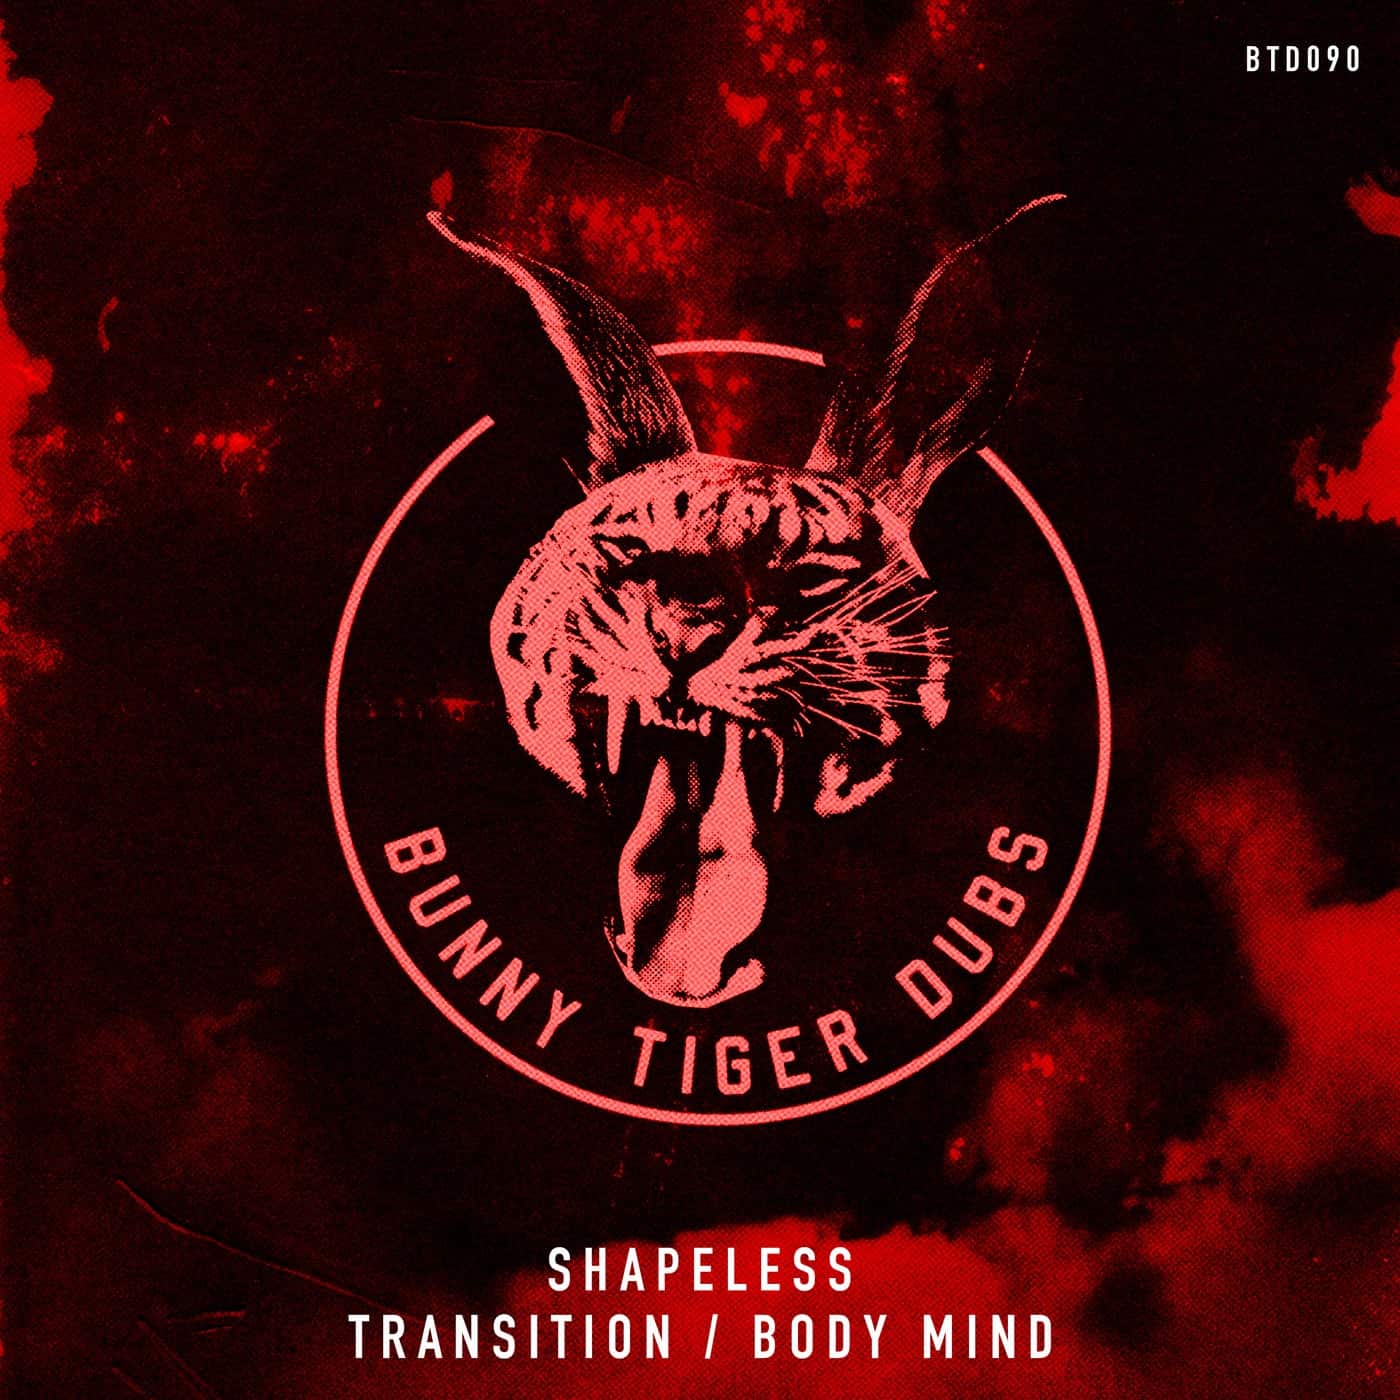 Download Transition / Body Mind on Electrobuzz